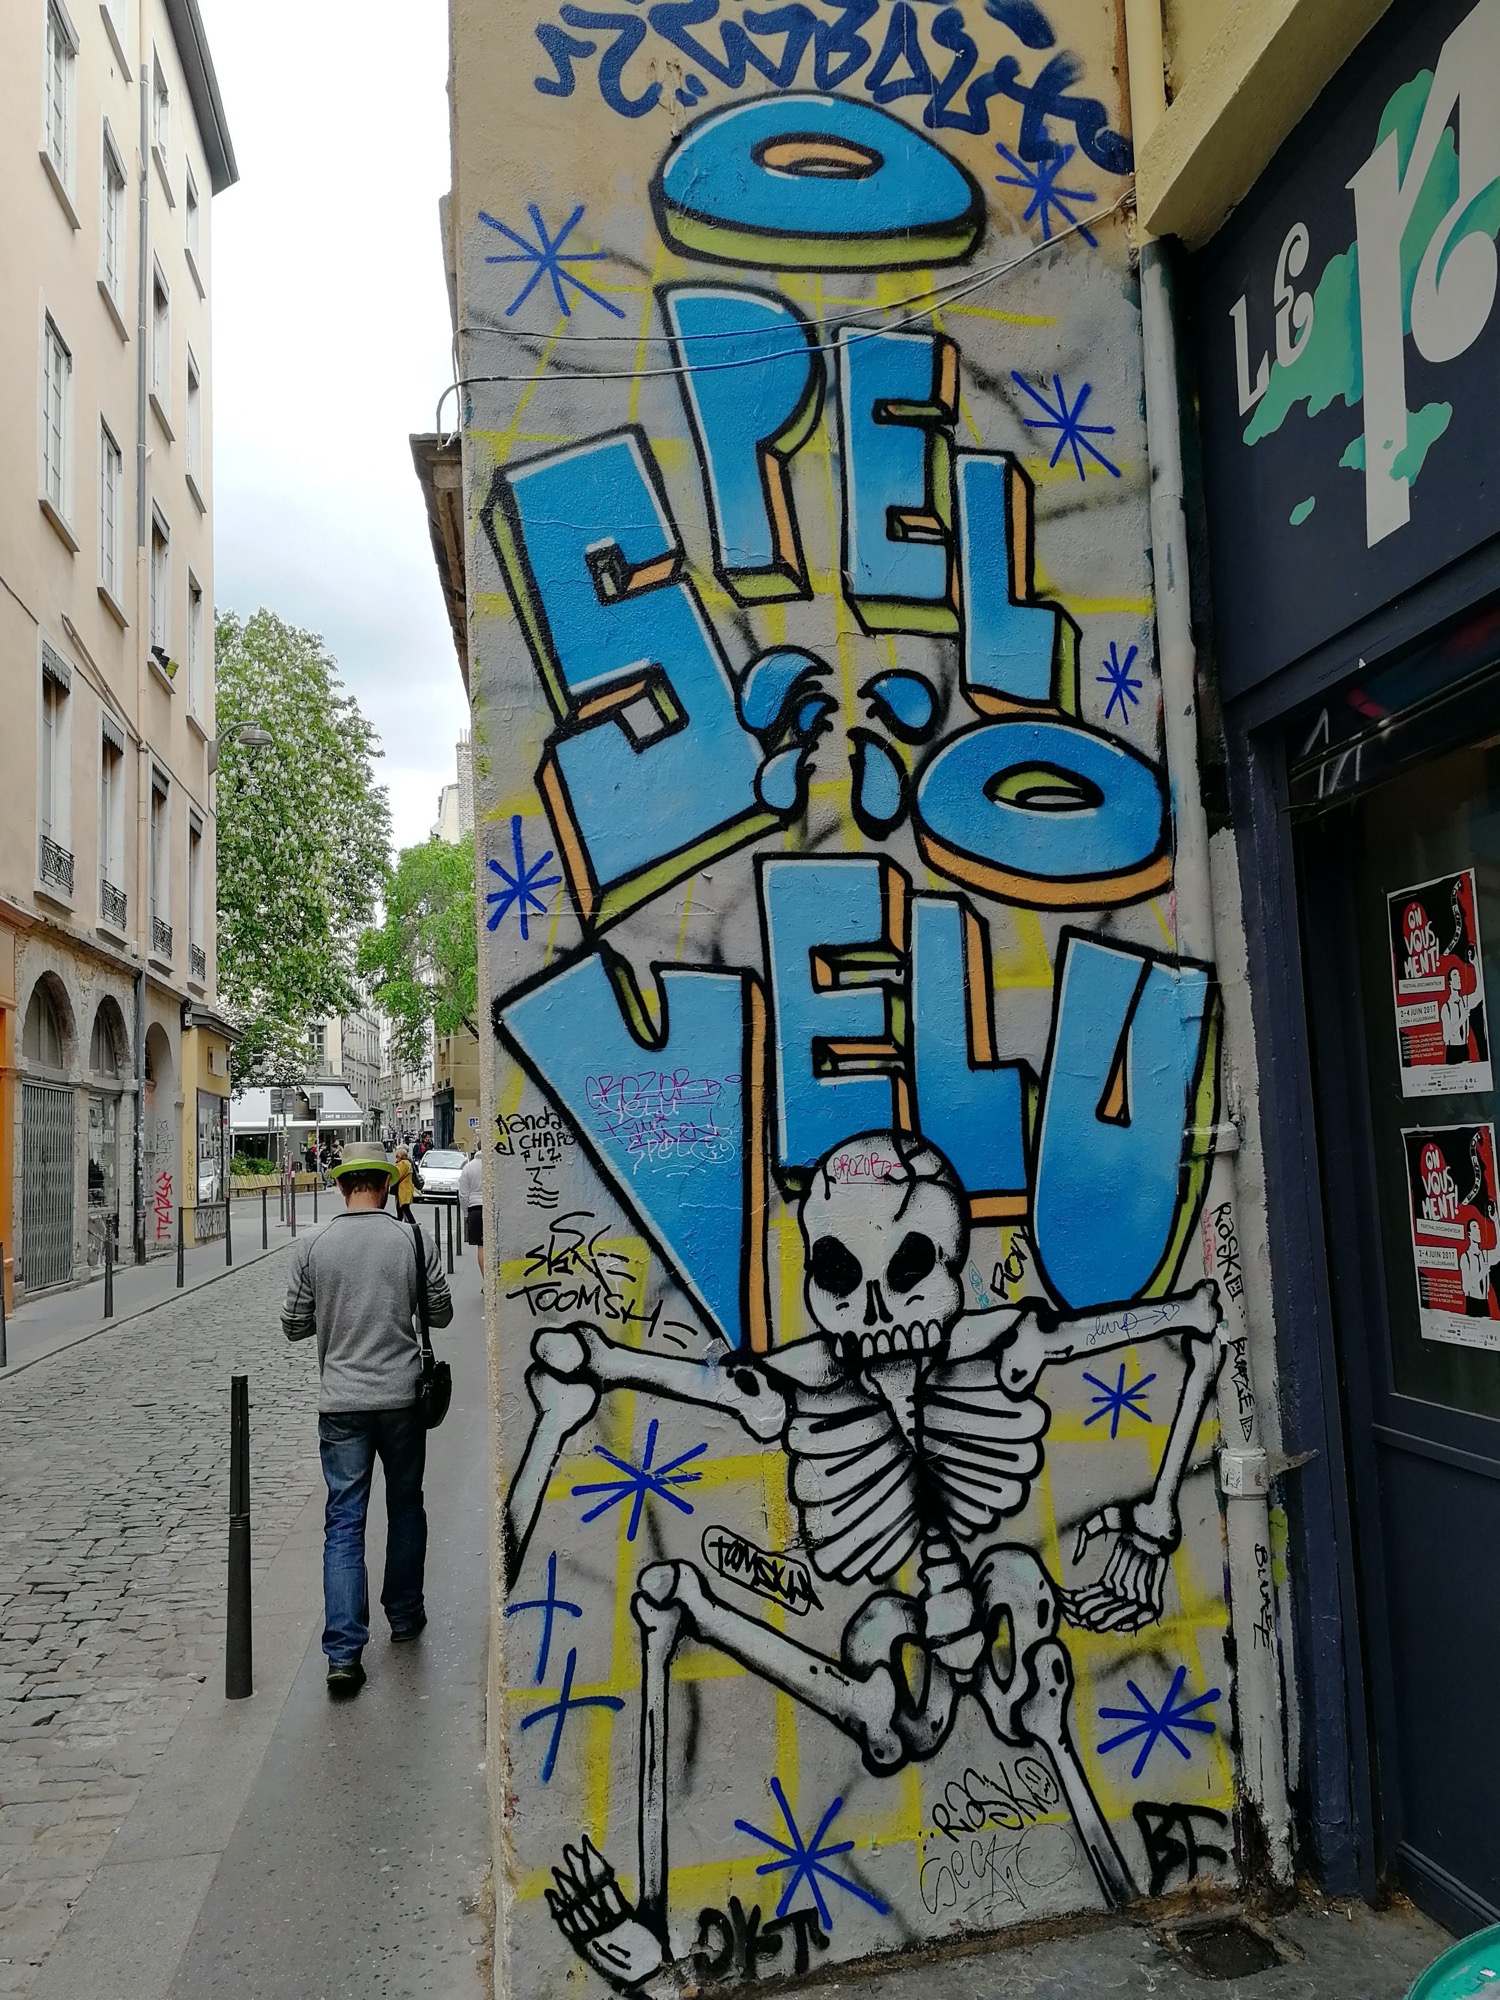 Graffiti 1550 Spelo velu captured by Rabot in Lyon France